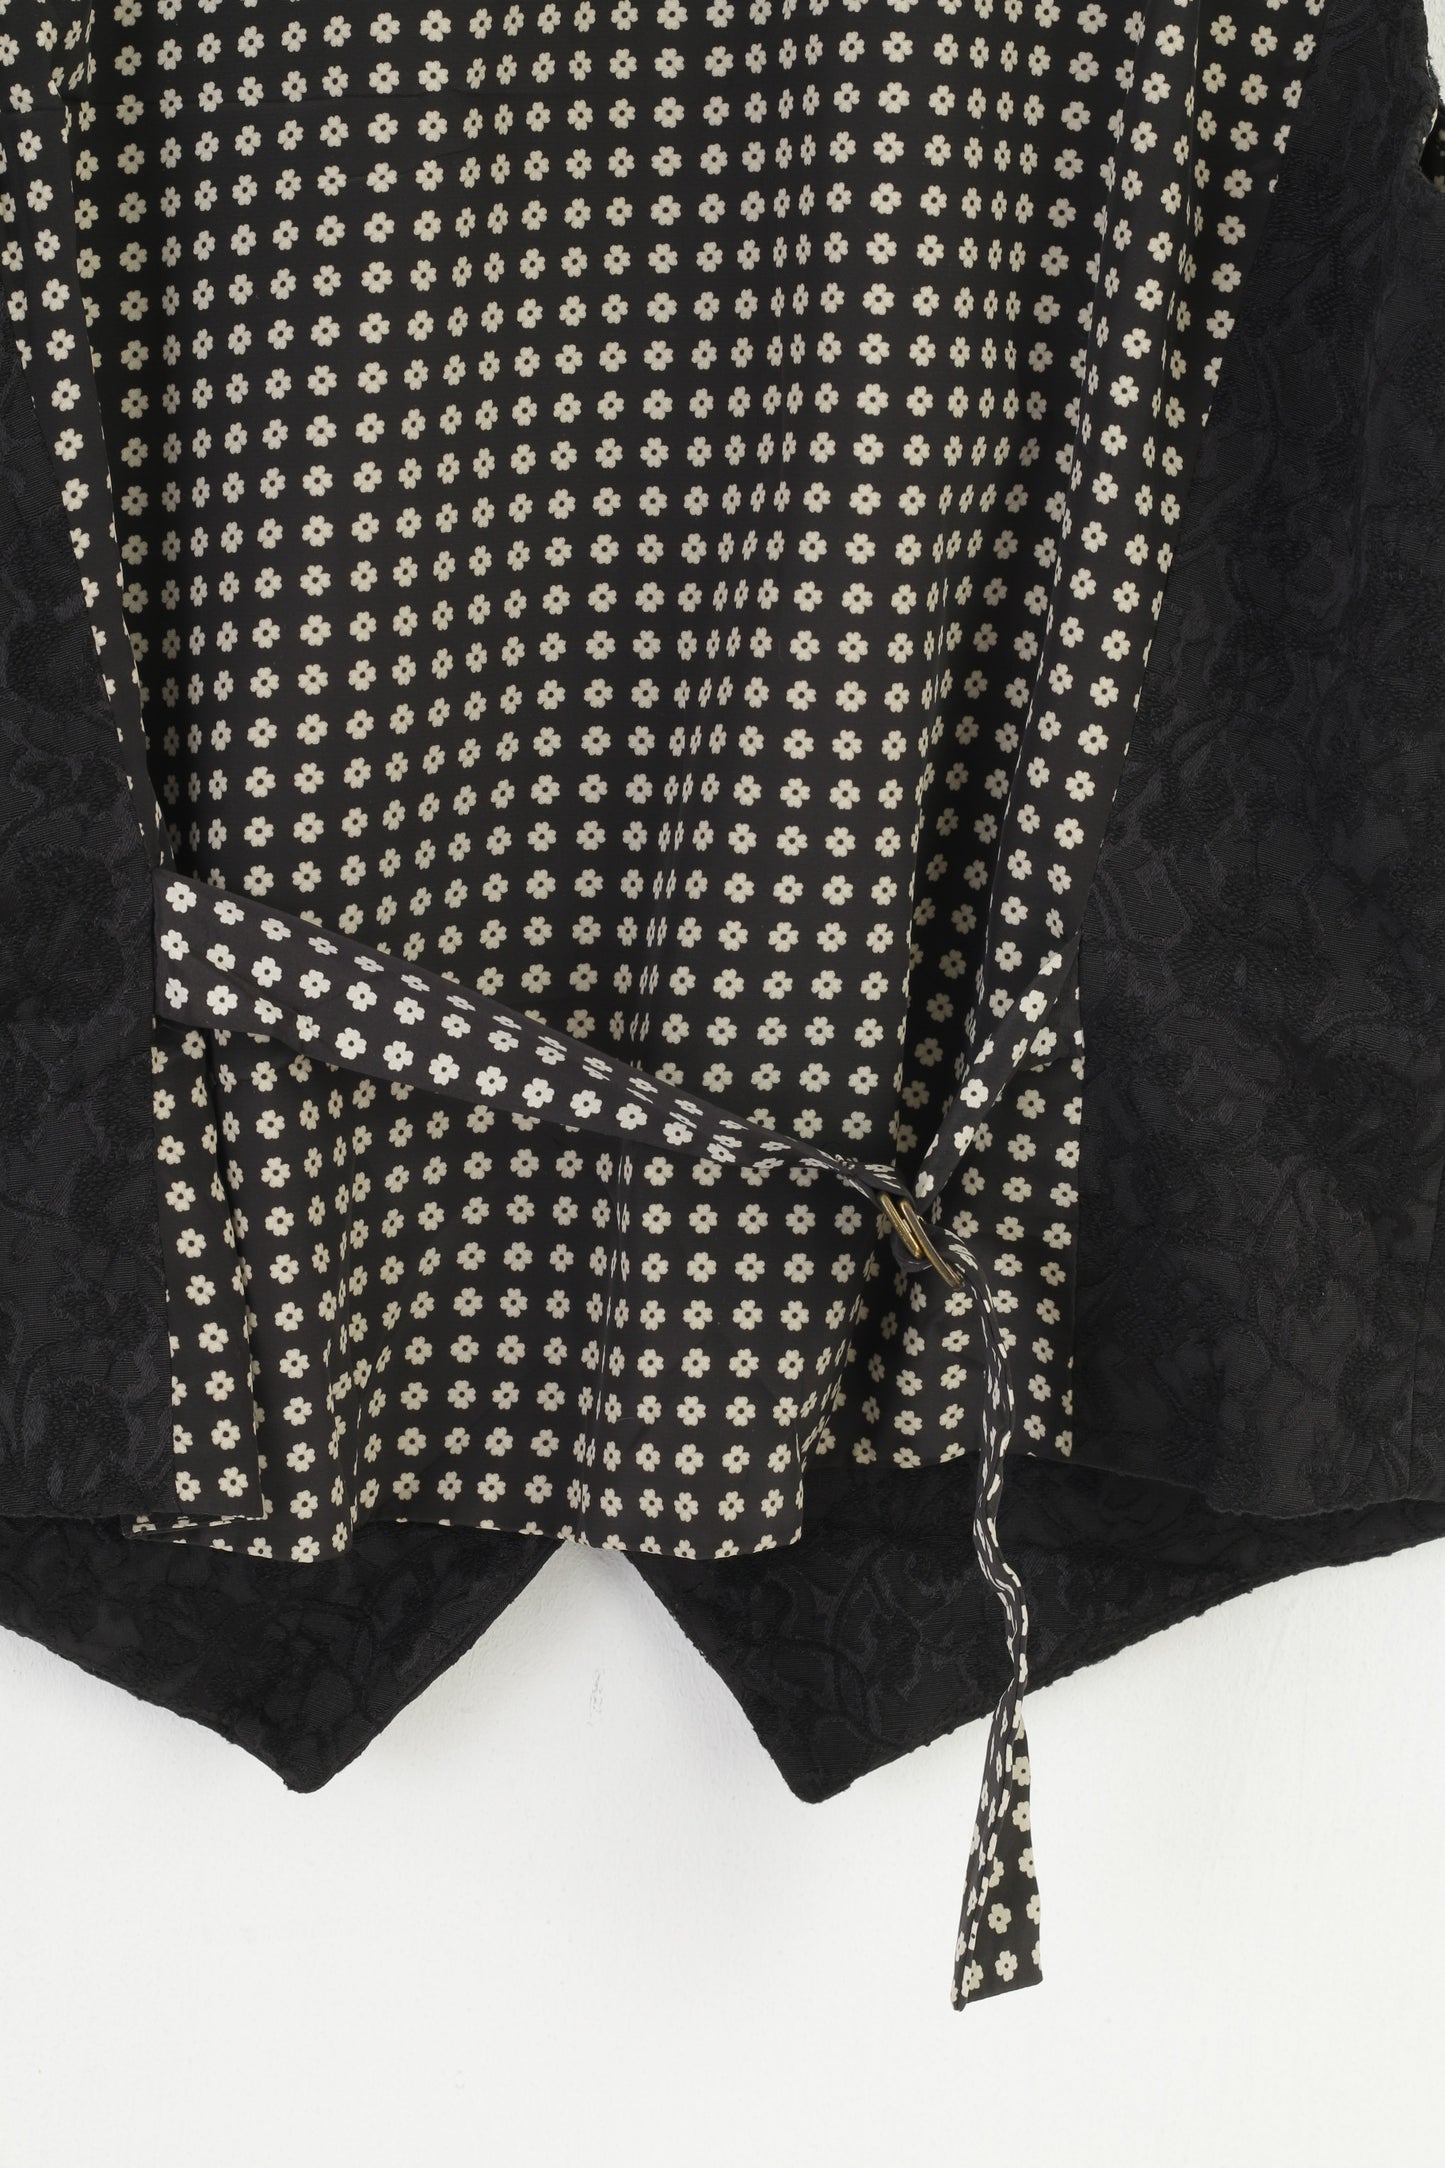 Bandolera Women 44 XL Vest Double Breasted Cotton Flower Print Black Sleevelees Embroidery Vintage Top